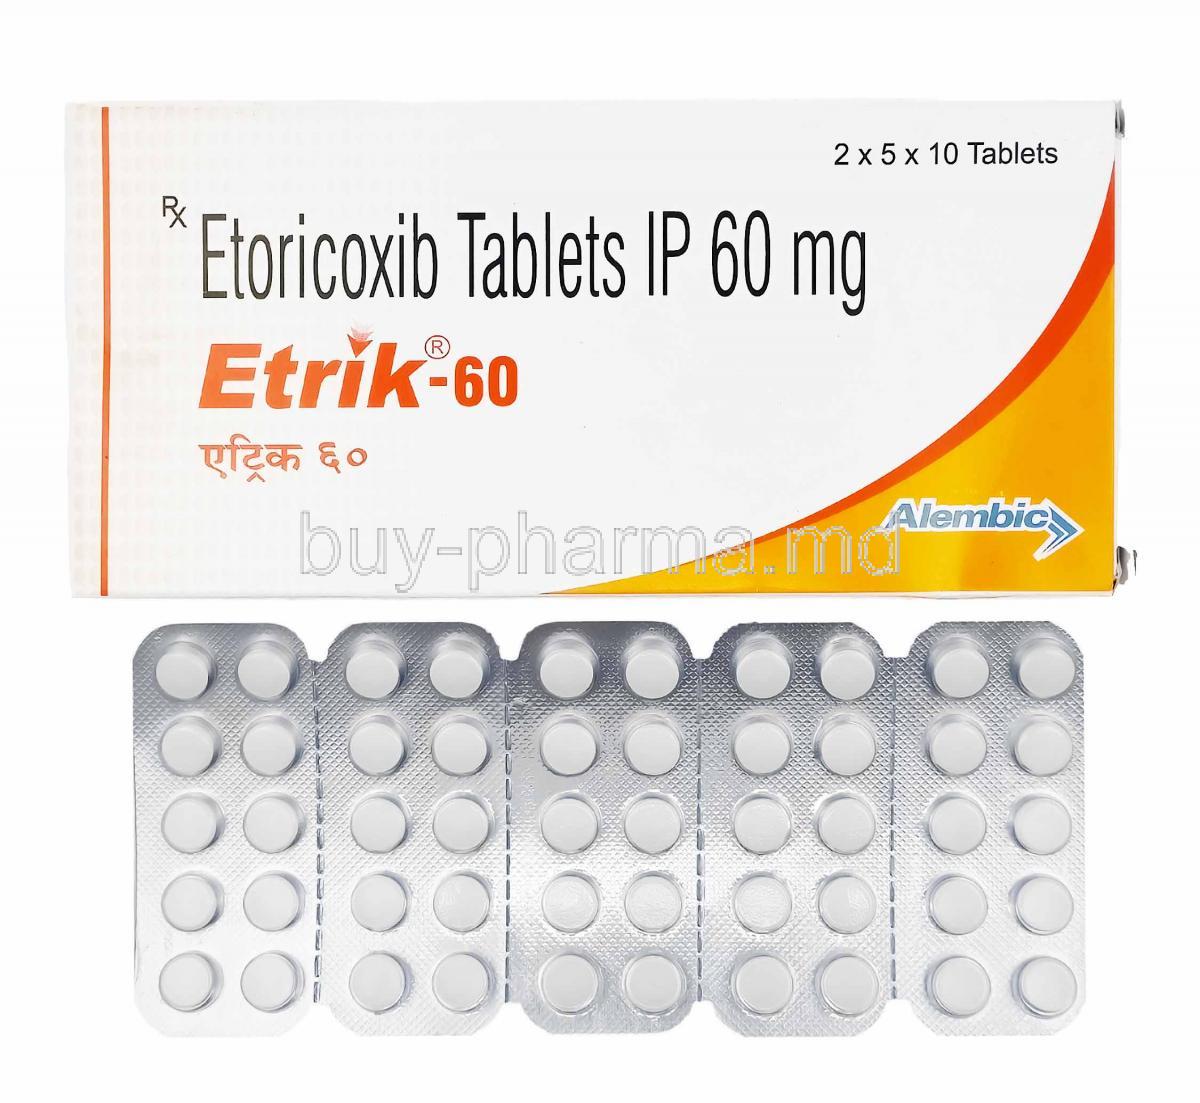 Etrik, Etoricoxib 60mg, box and tablets